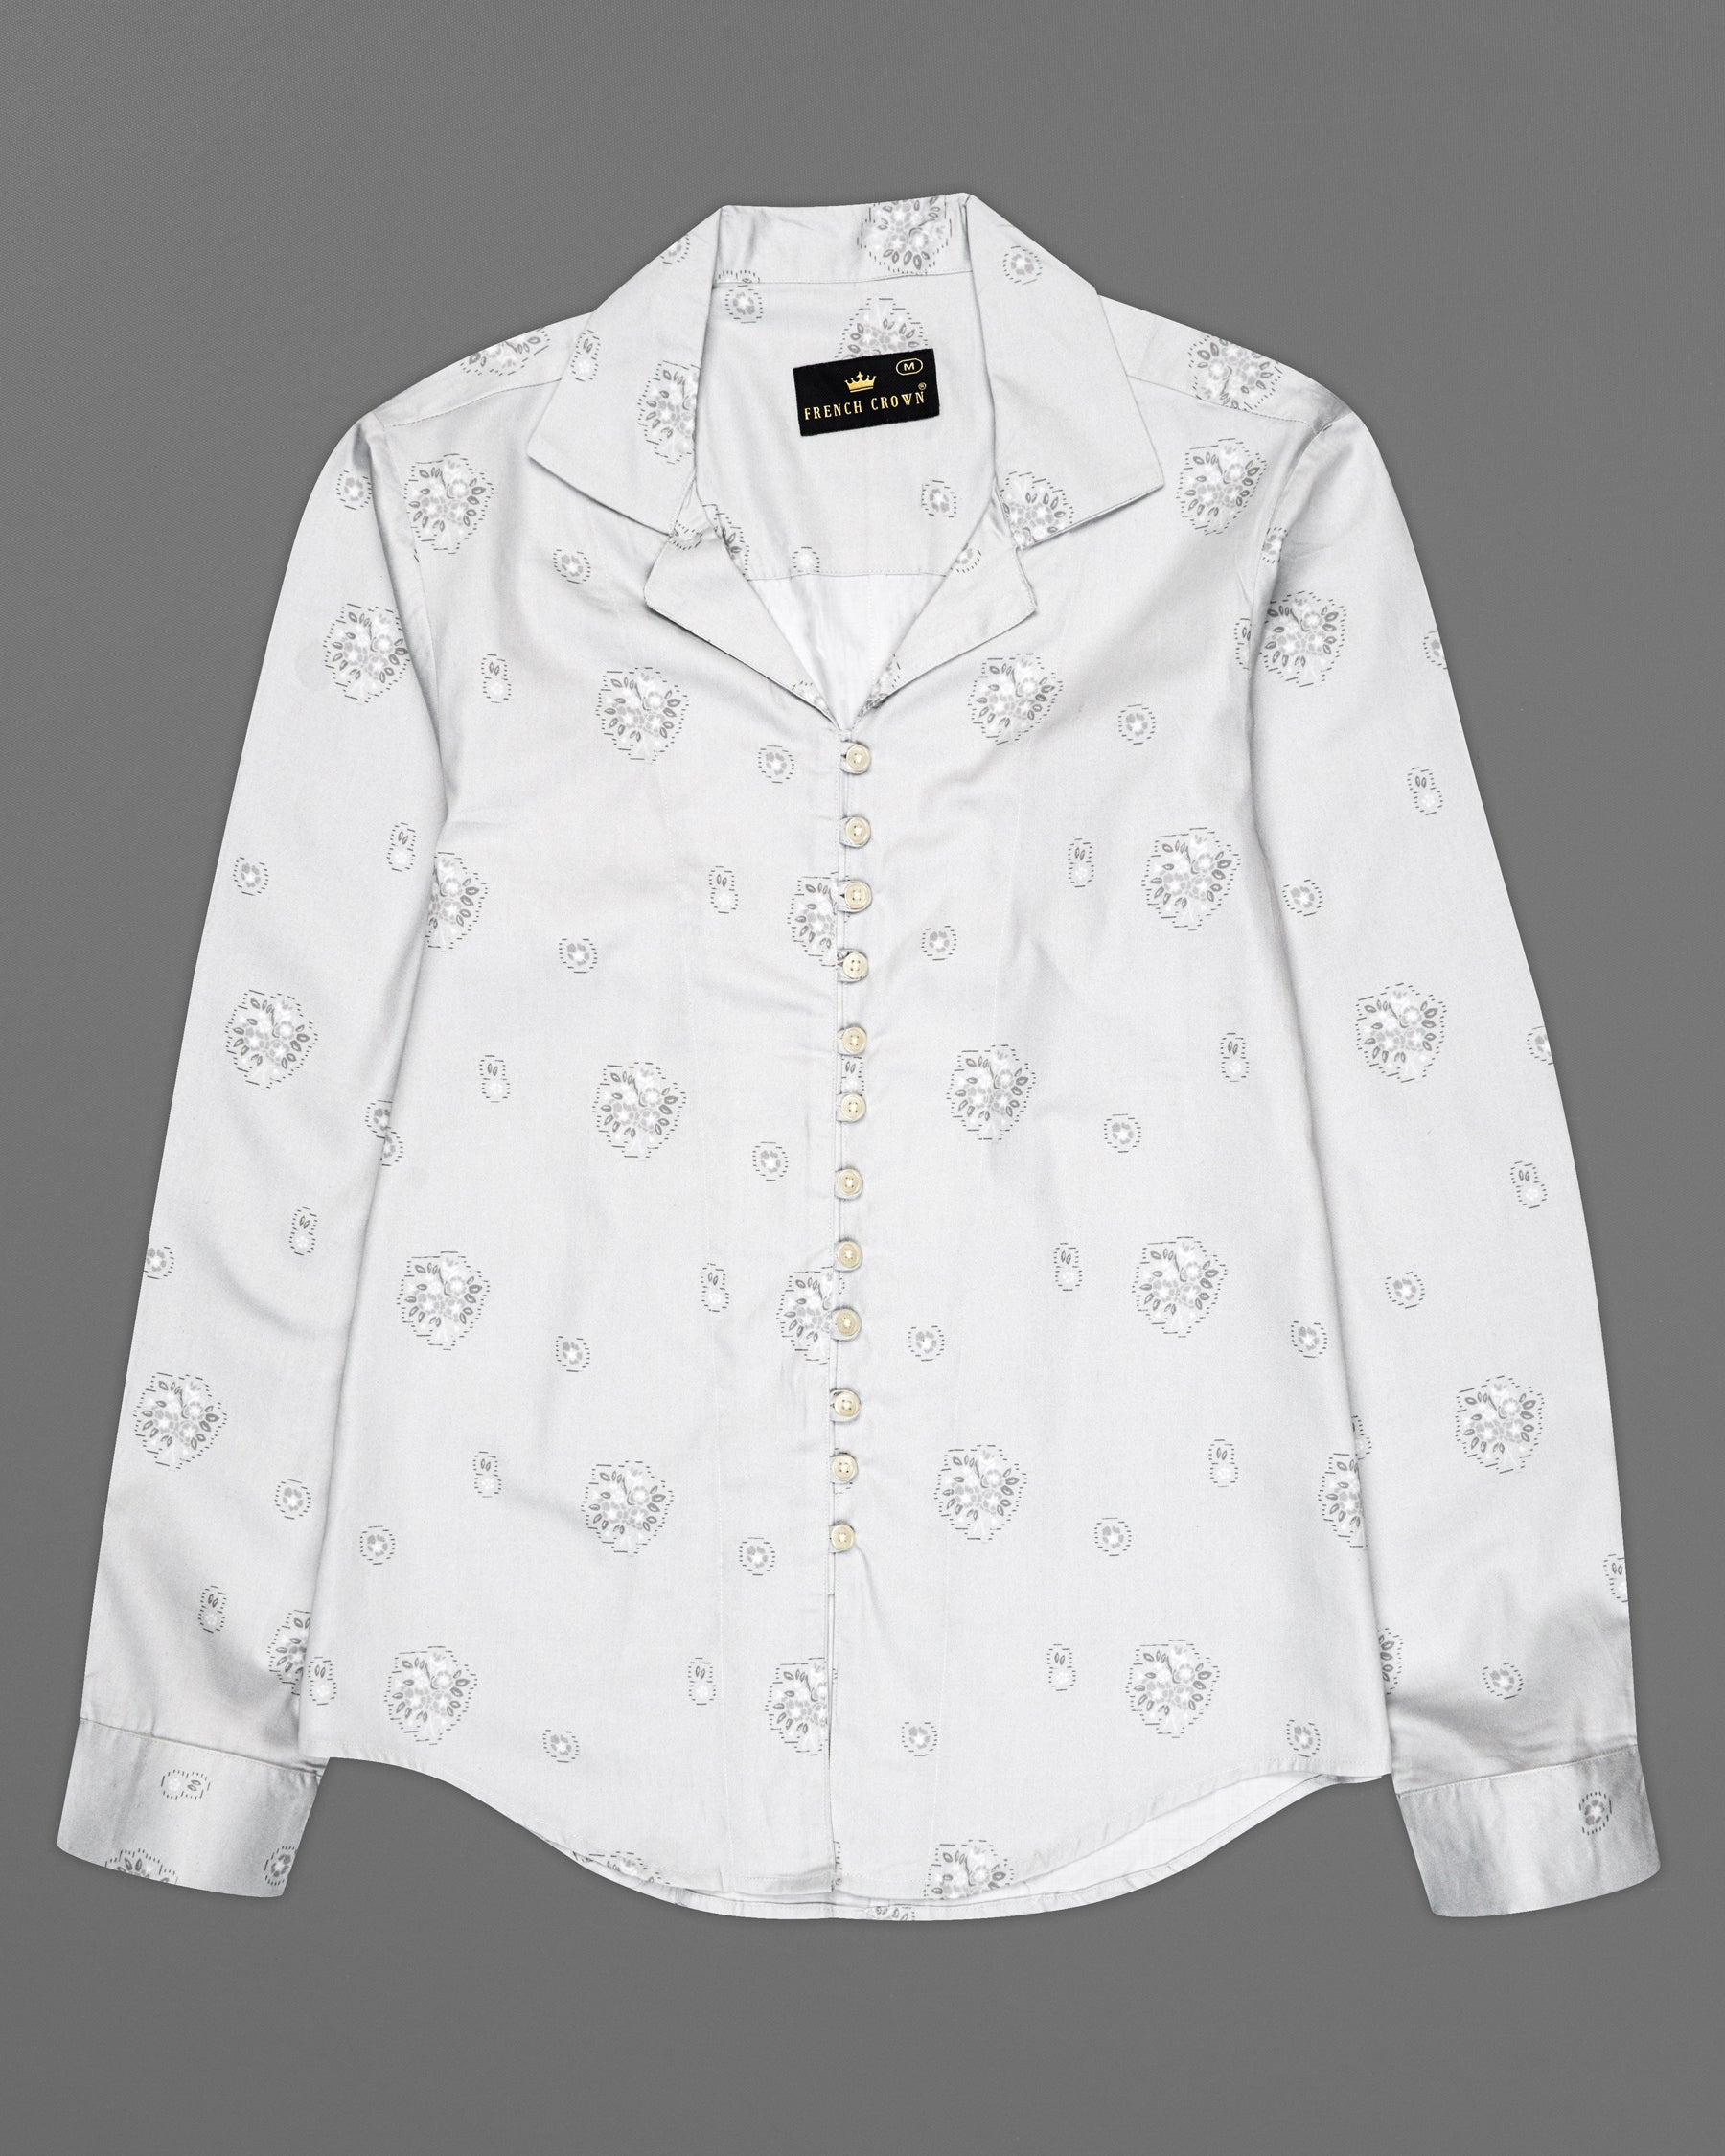 Timberwolf Gray with Printed Super Soft Premium Cotton Women’s Shirt WS066-32, WS066-34, WS066-36, WS066-38, WS066-40, WS066-42